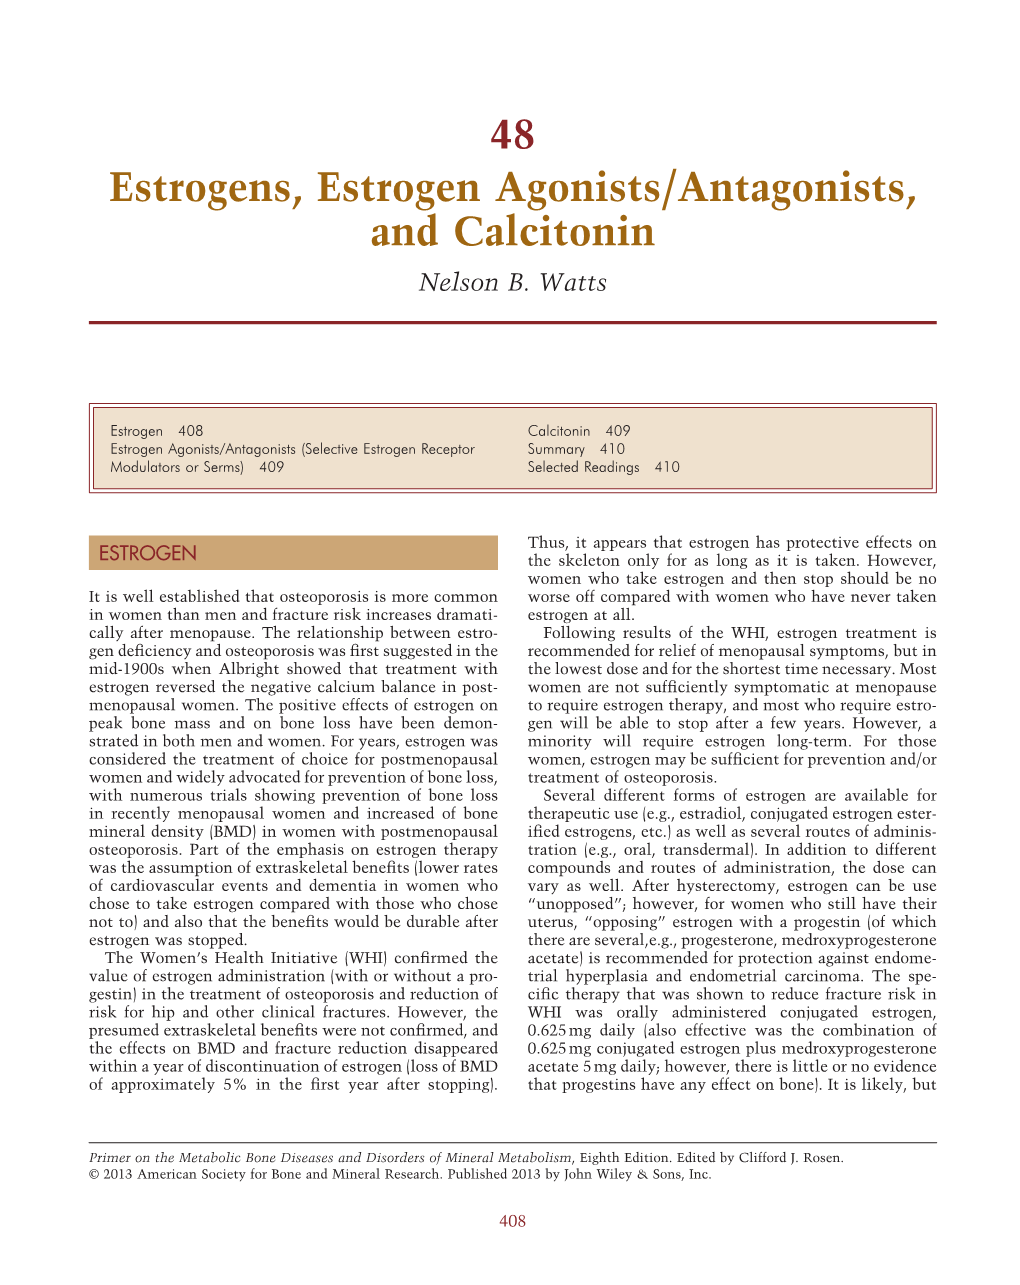 Estrogens, Estrogen Agonists/Antagonists, and Calcitonin Nelson B